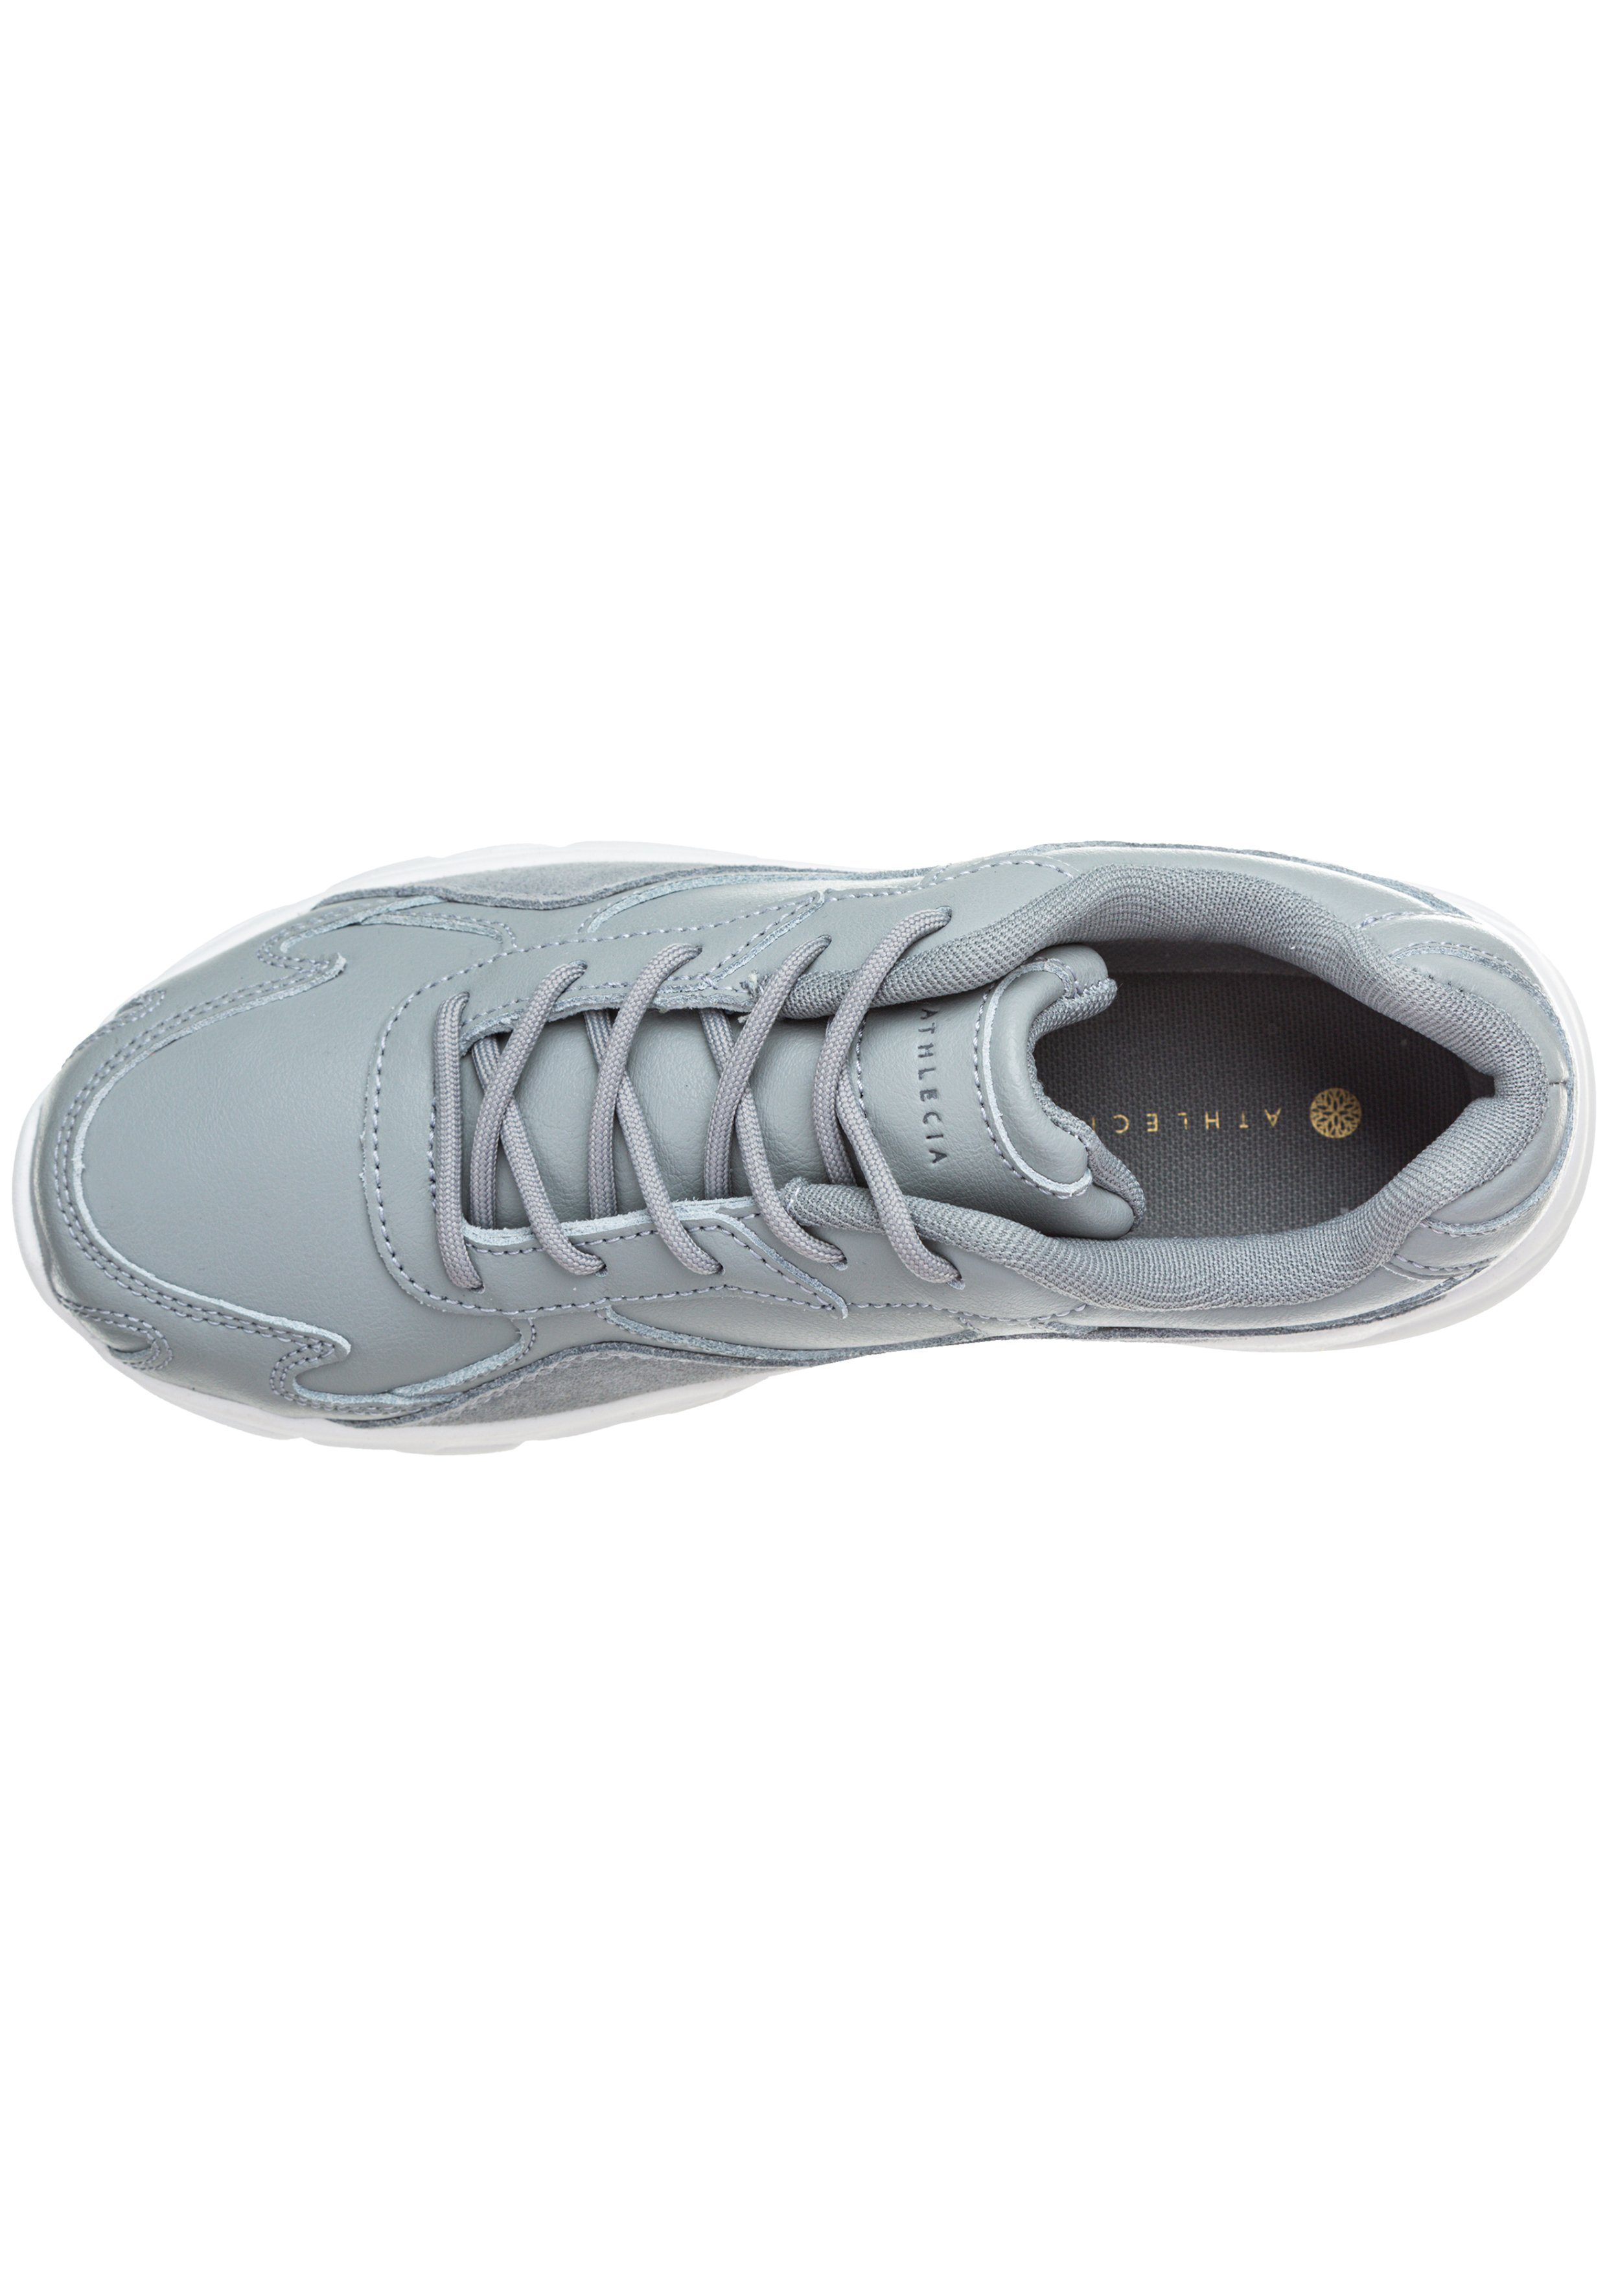 Sneaker CHUNKY grau-weiß sportlichen ATHLECIA Style Leather im Trainers